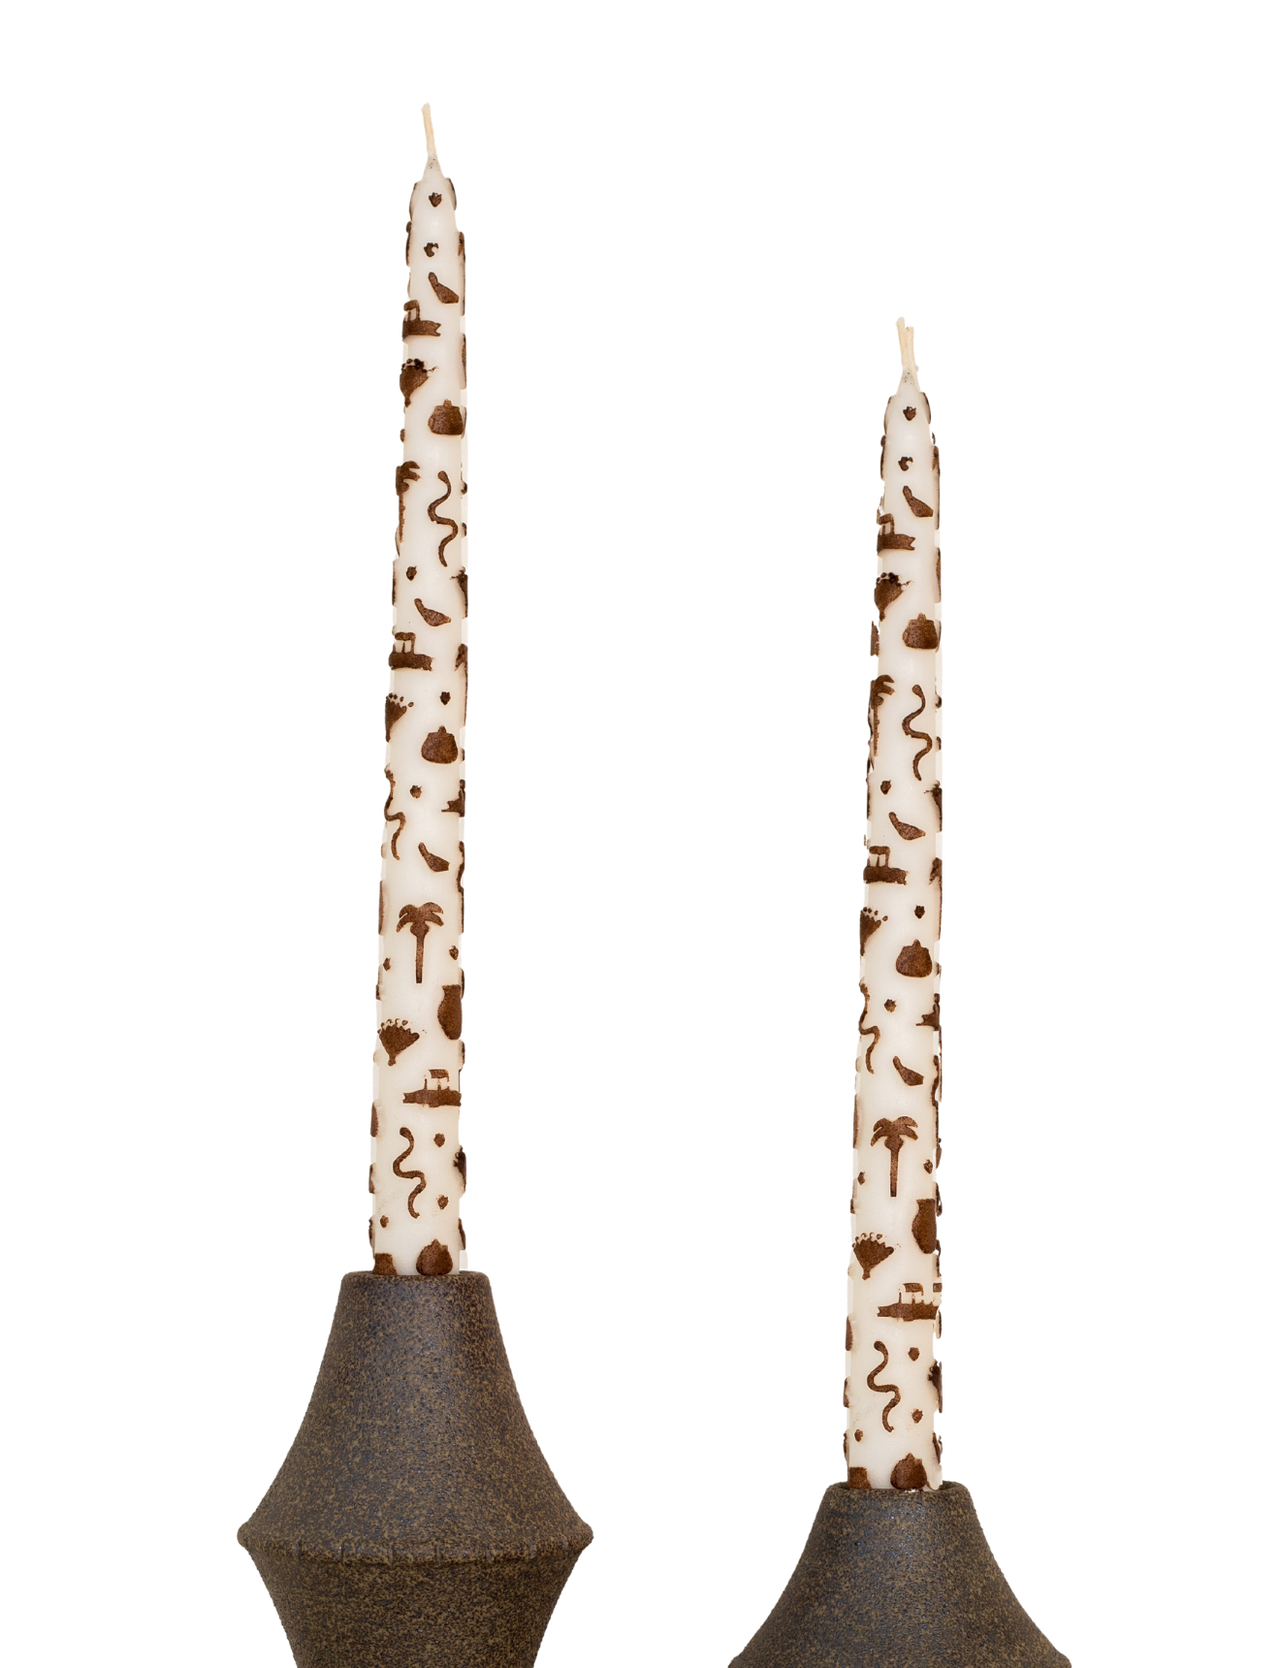  Public Figure | Marloe Marloe | Hand Carved Island Tapered Candle - Island